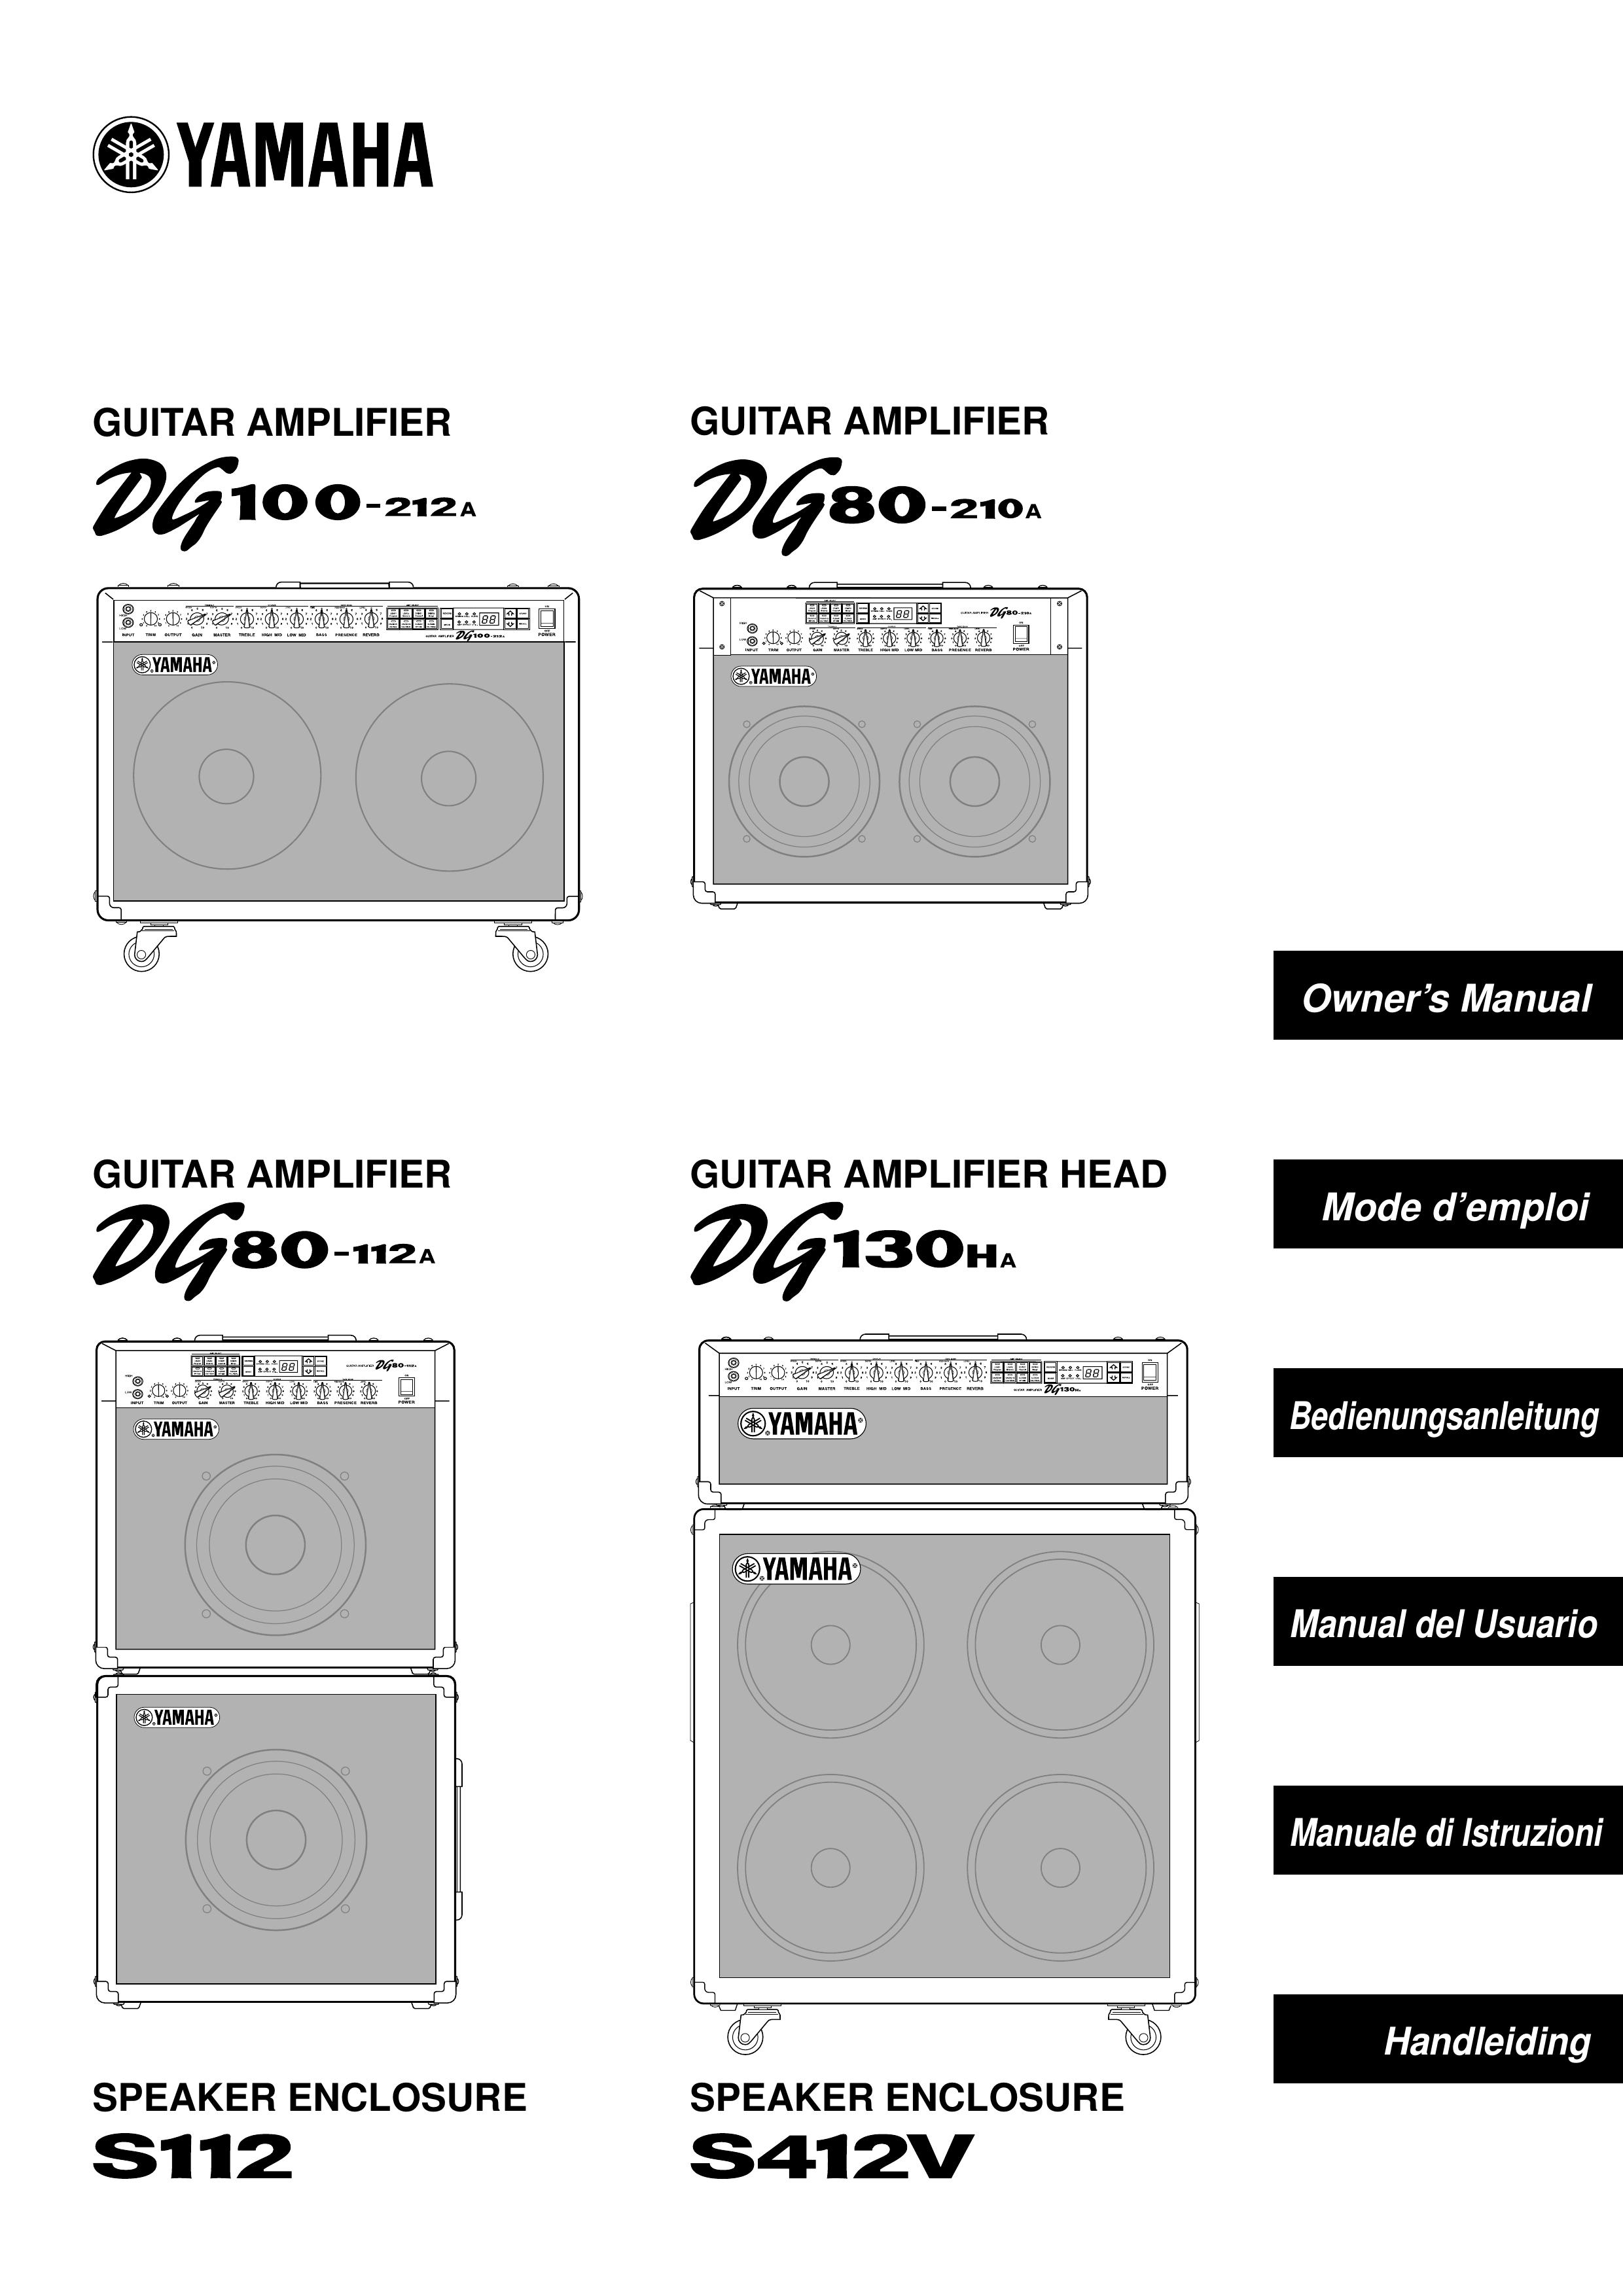 Yamaha DG80-210A Musical Instrument Amplifier User Manual